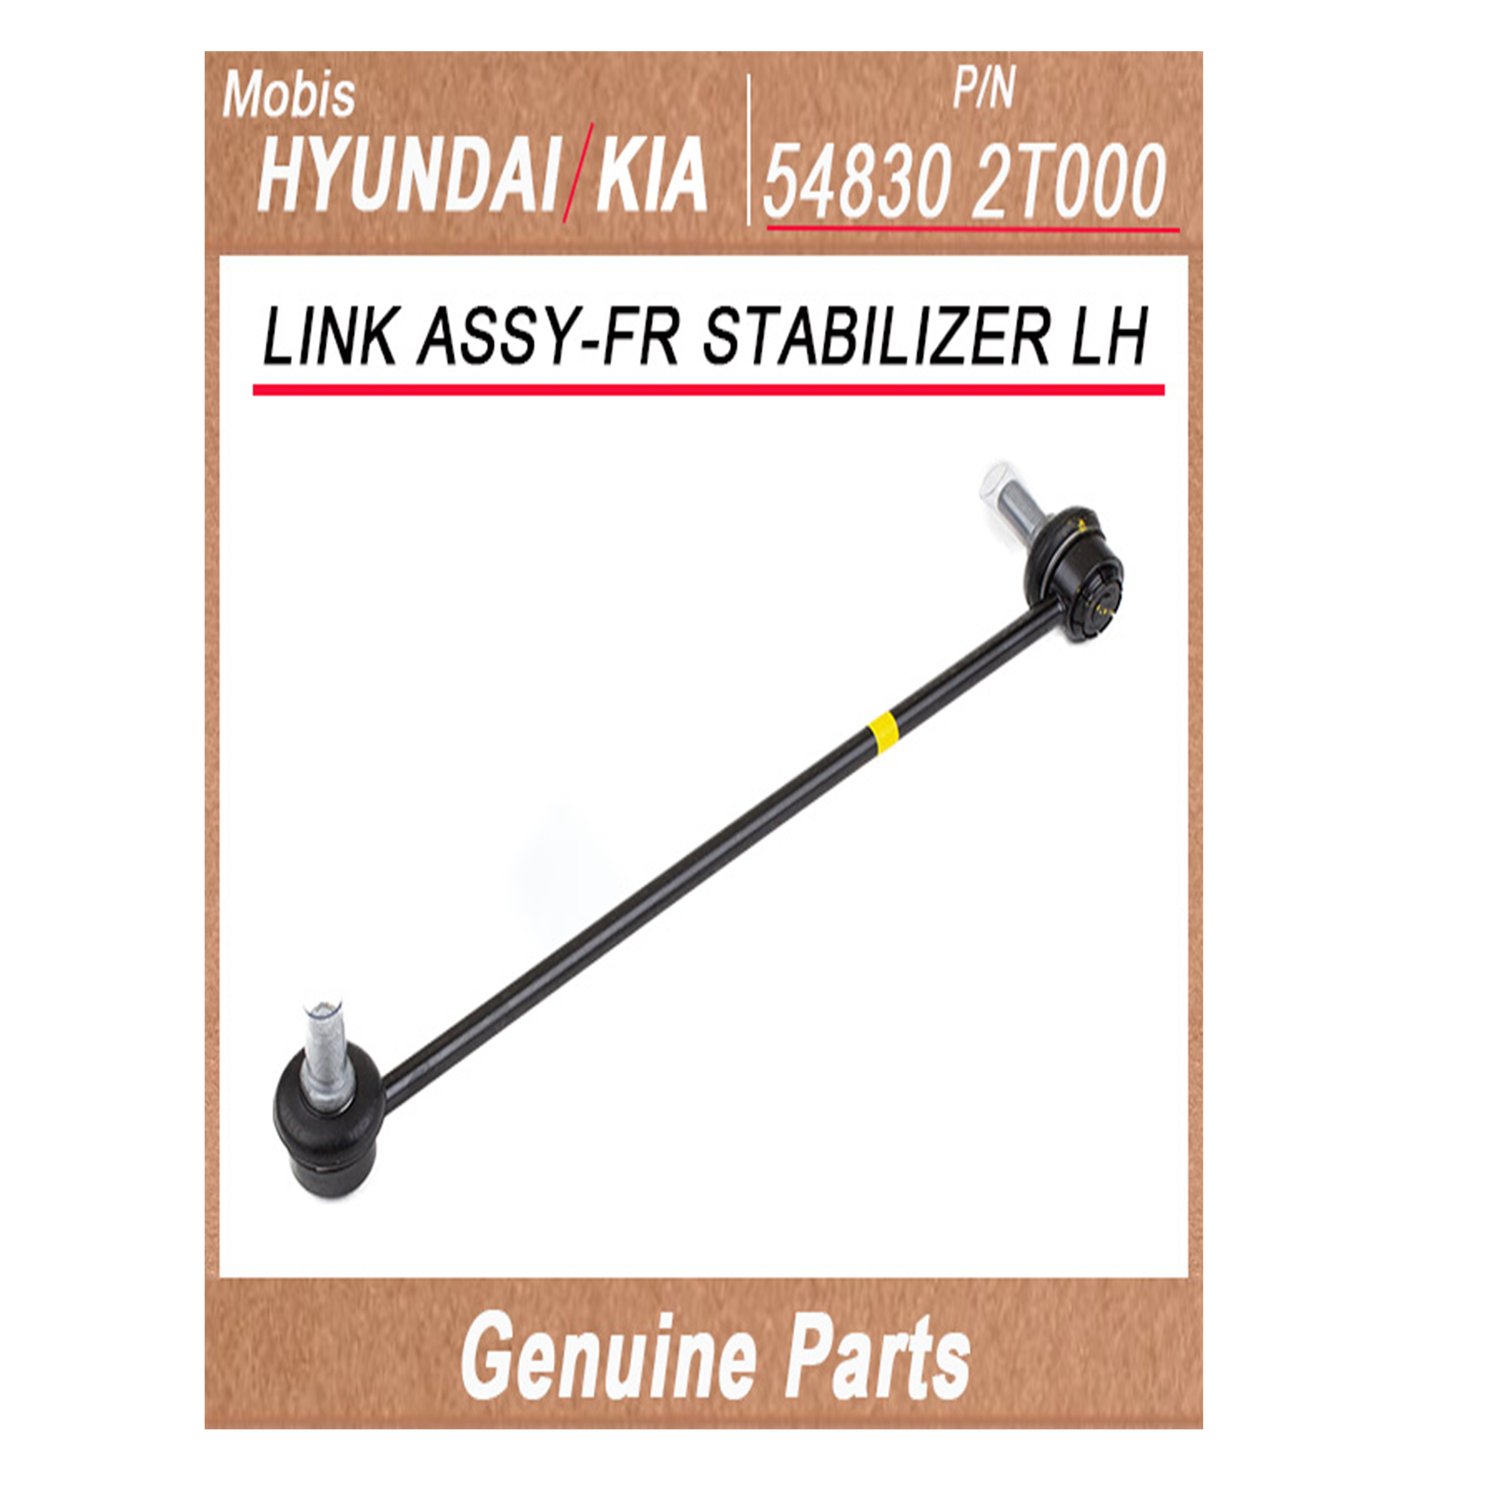 548302T000 _ LINK ASSY_FR STABILIZER LH _ Genuine Korean Automotive Spare Parts _ Hyundai Kia _Mobis